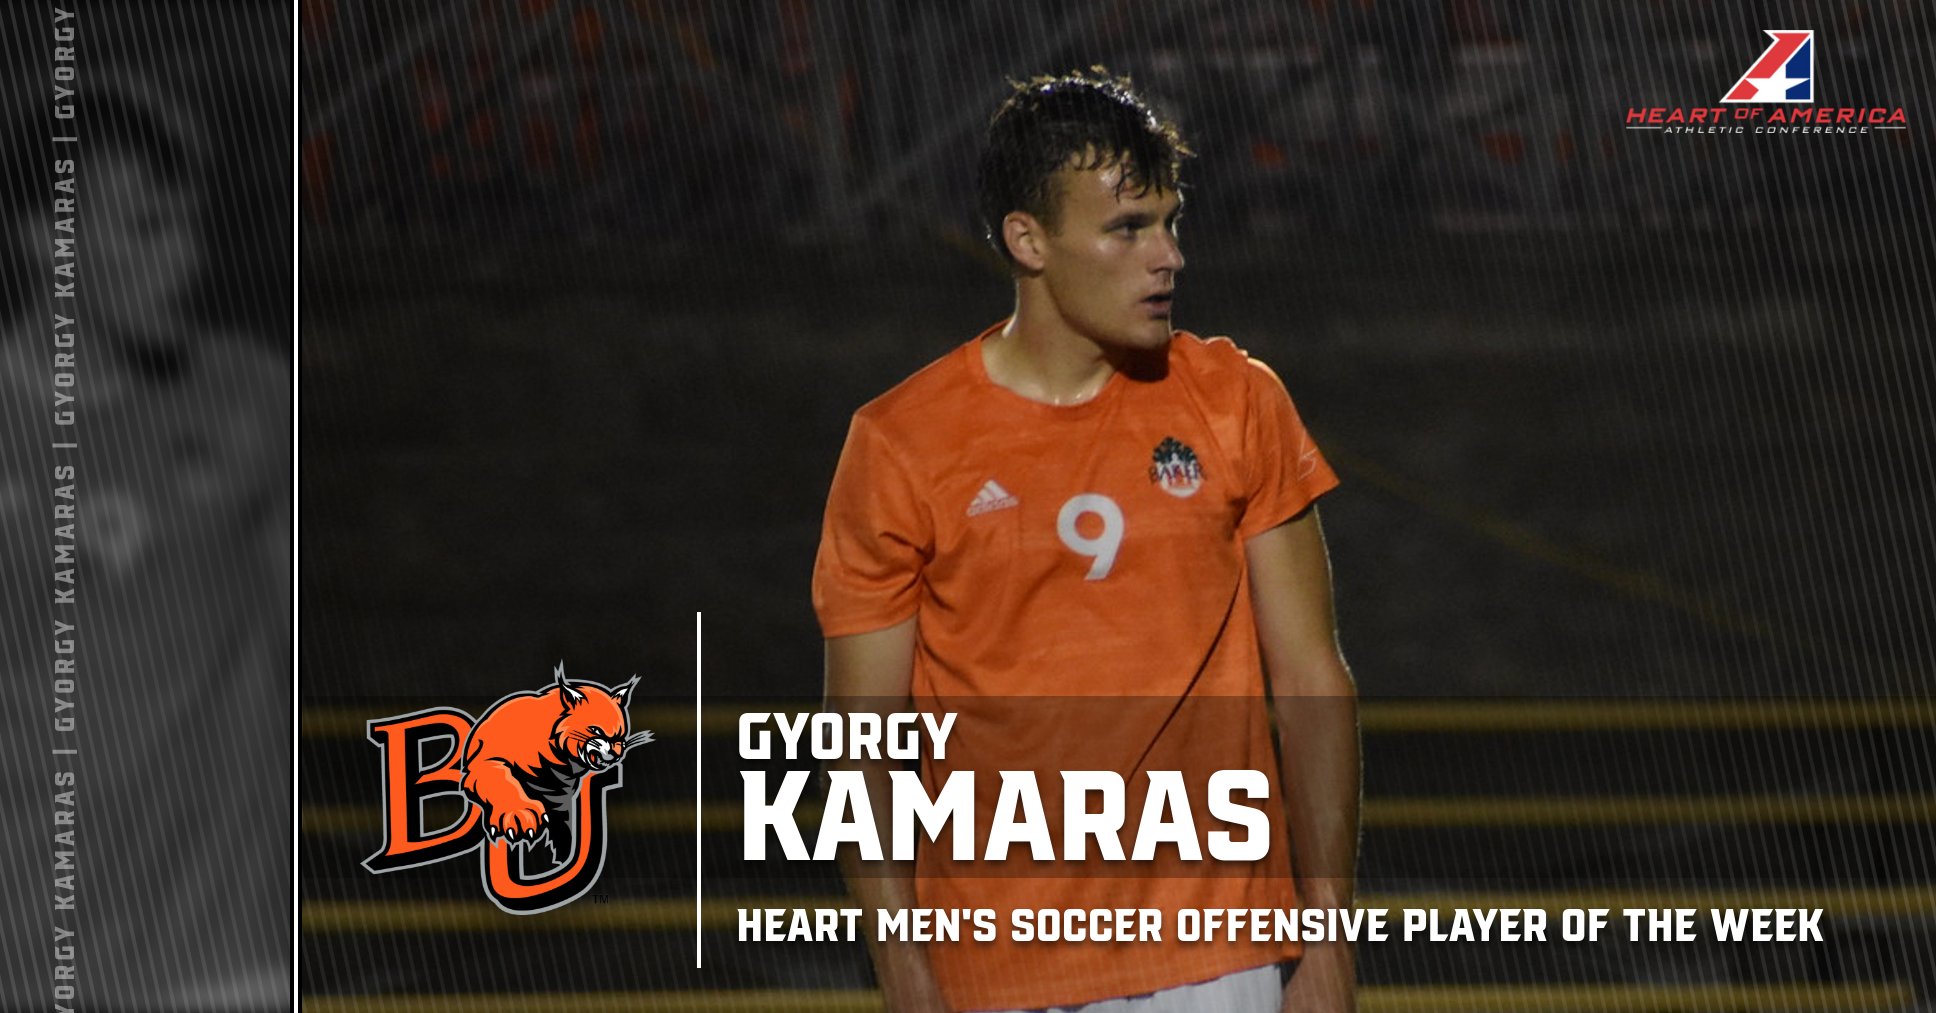 Kamaras Named Heart Offensive Player of the Week